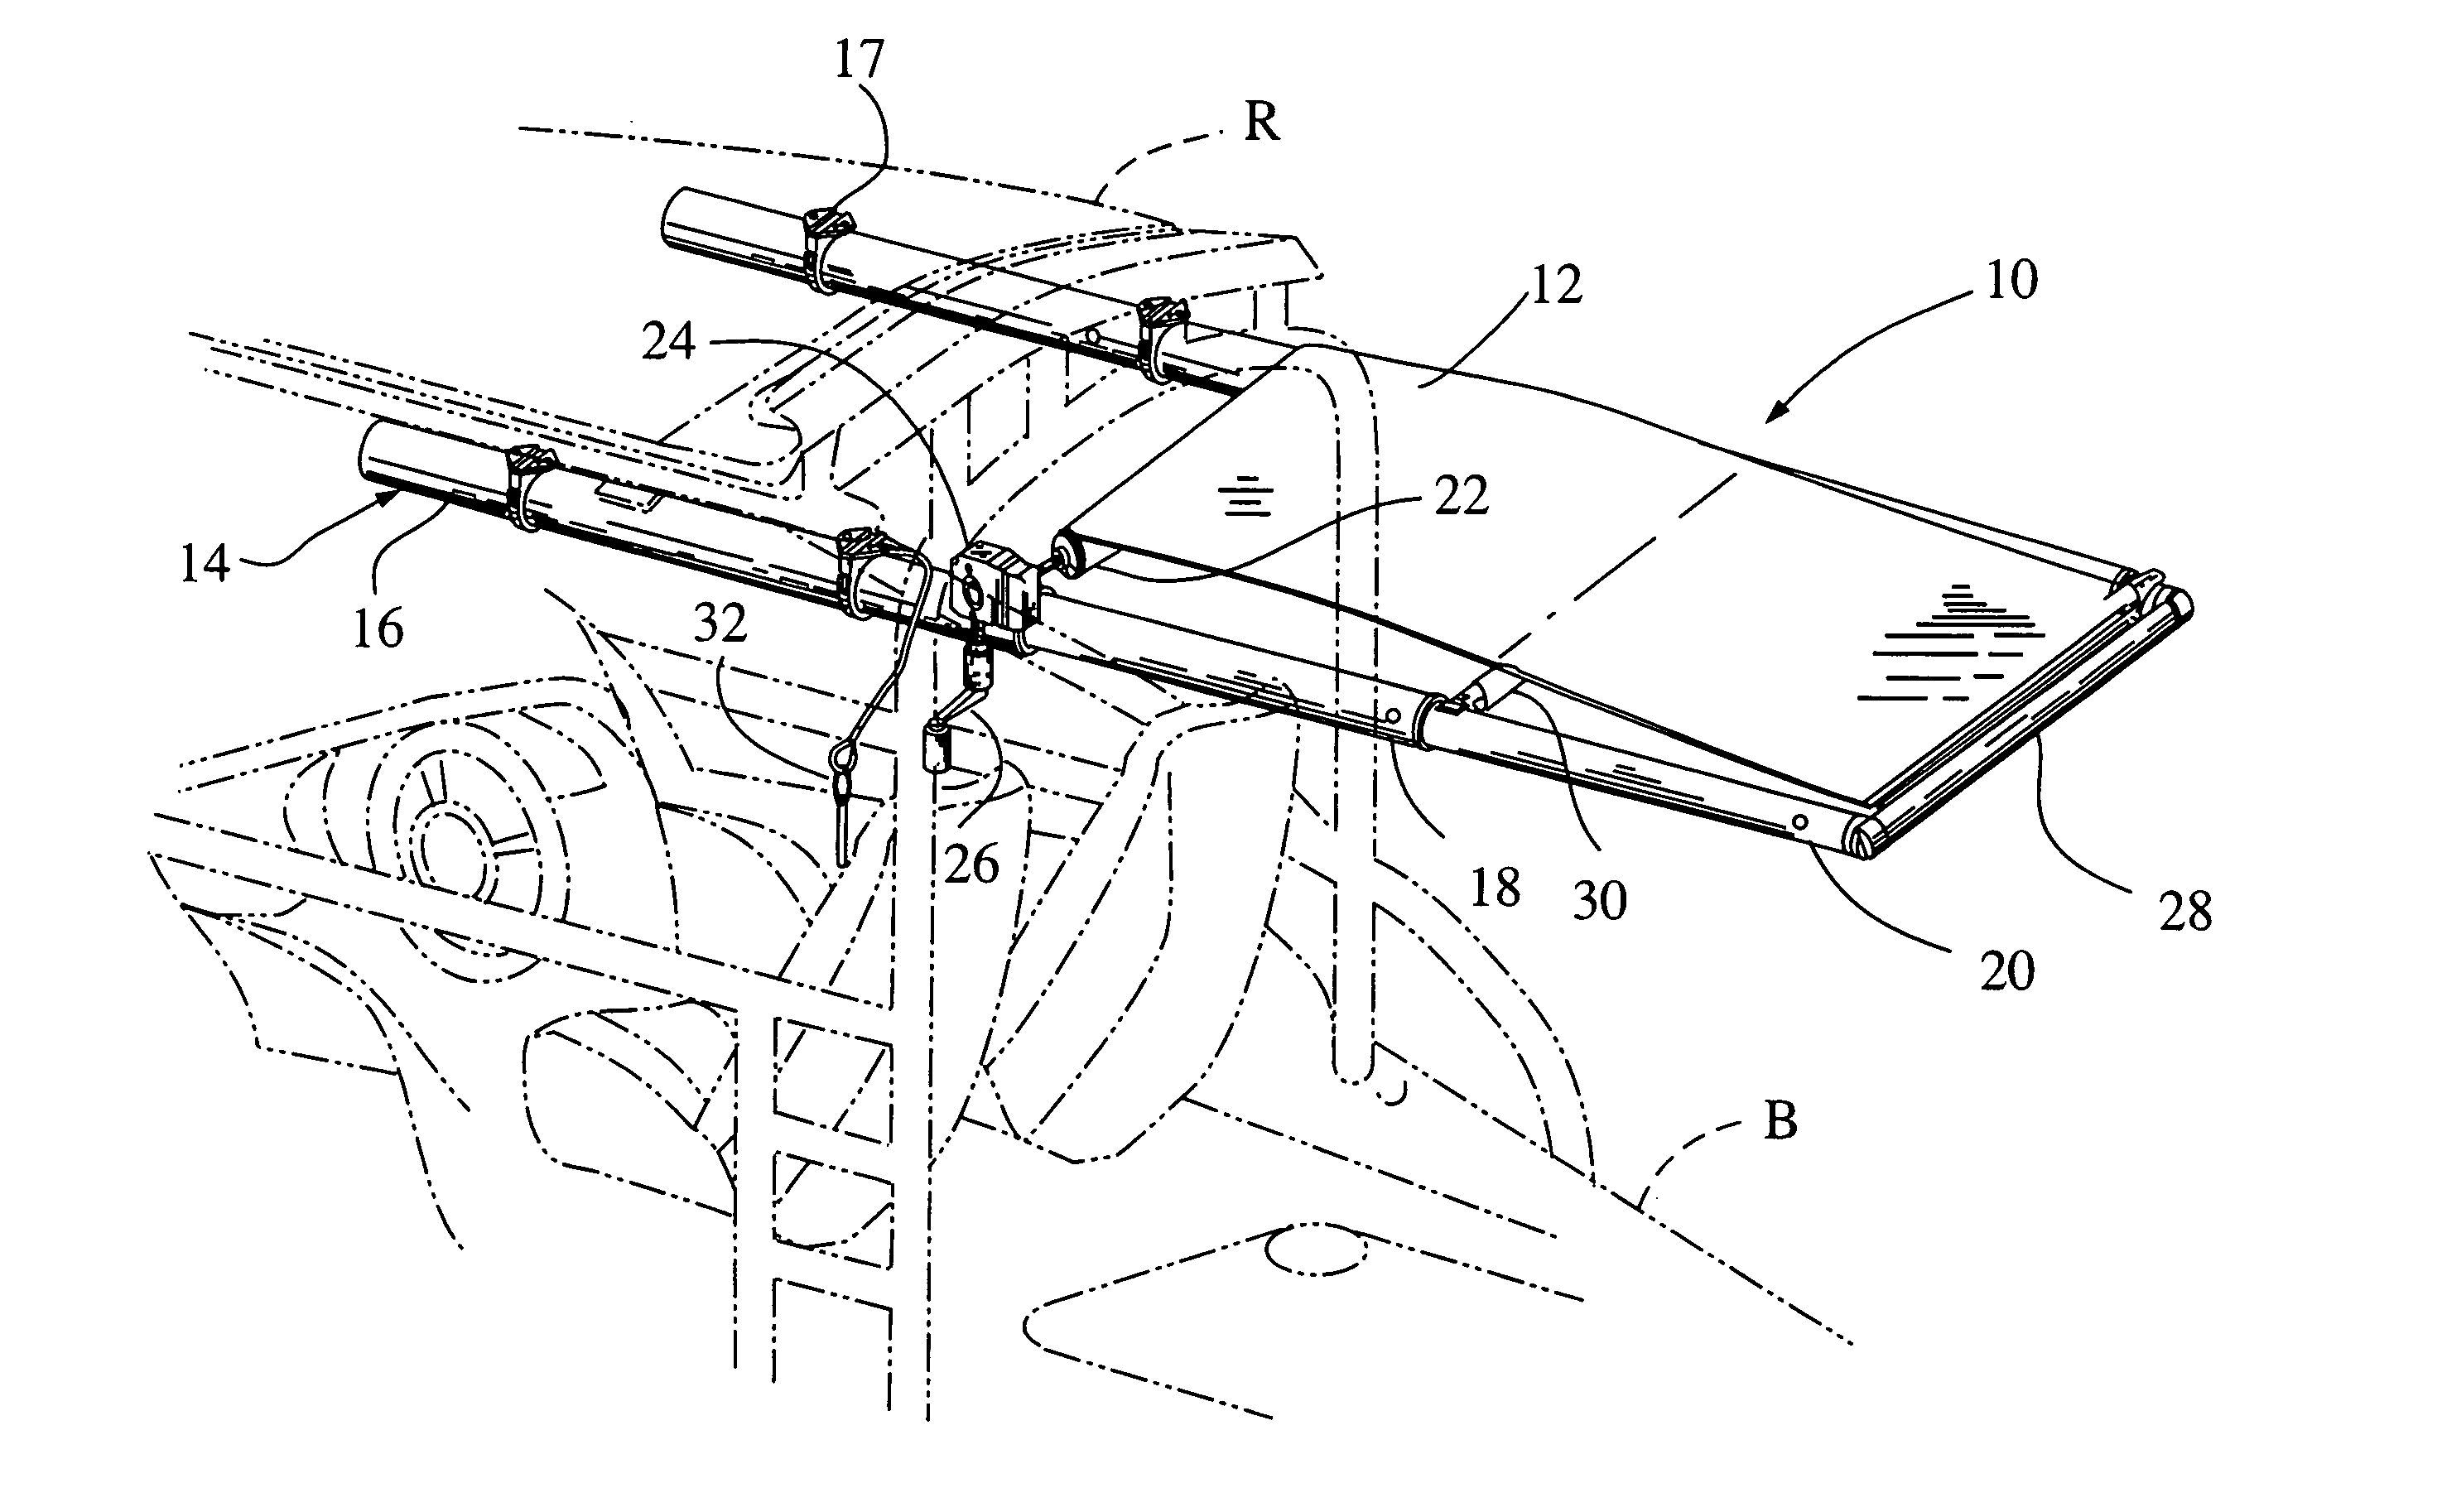 Manually-operated boat canopy system